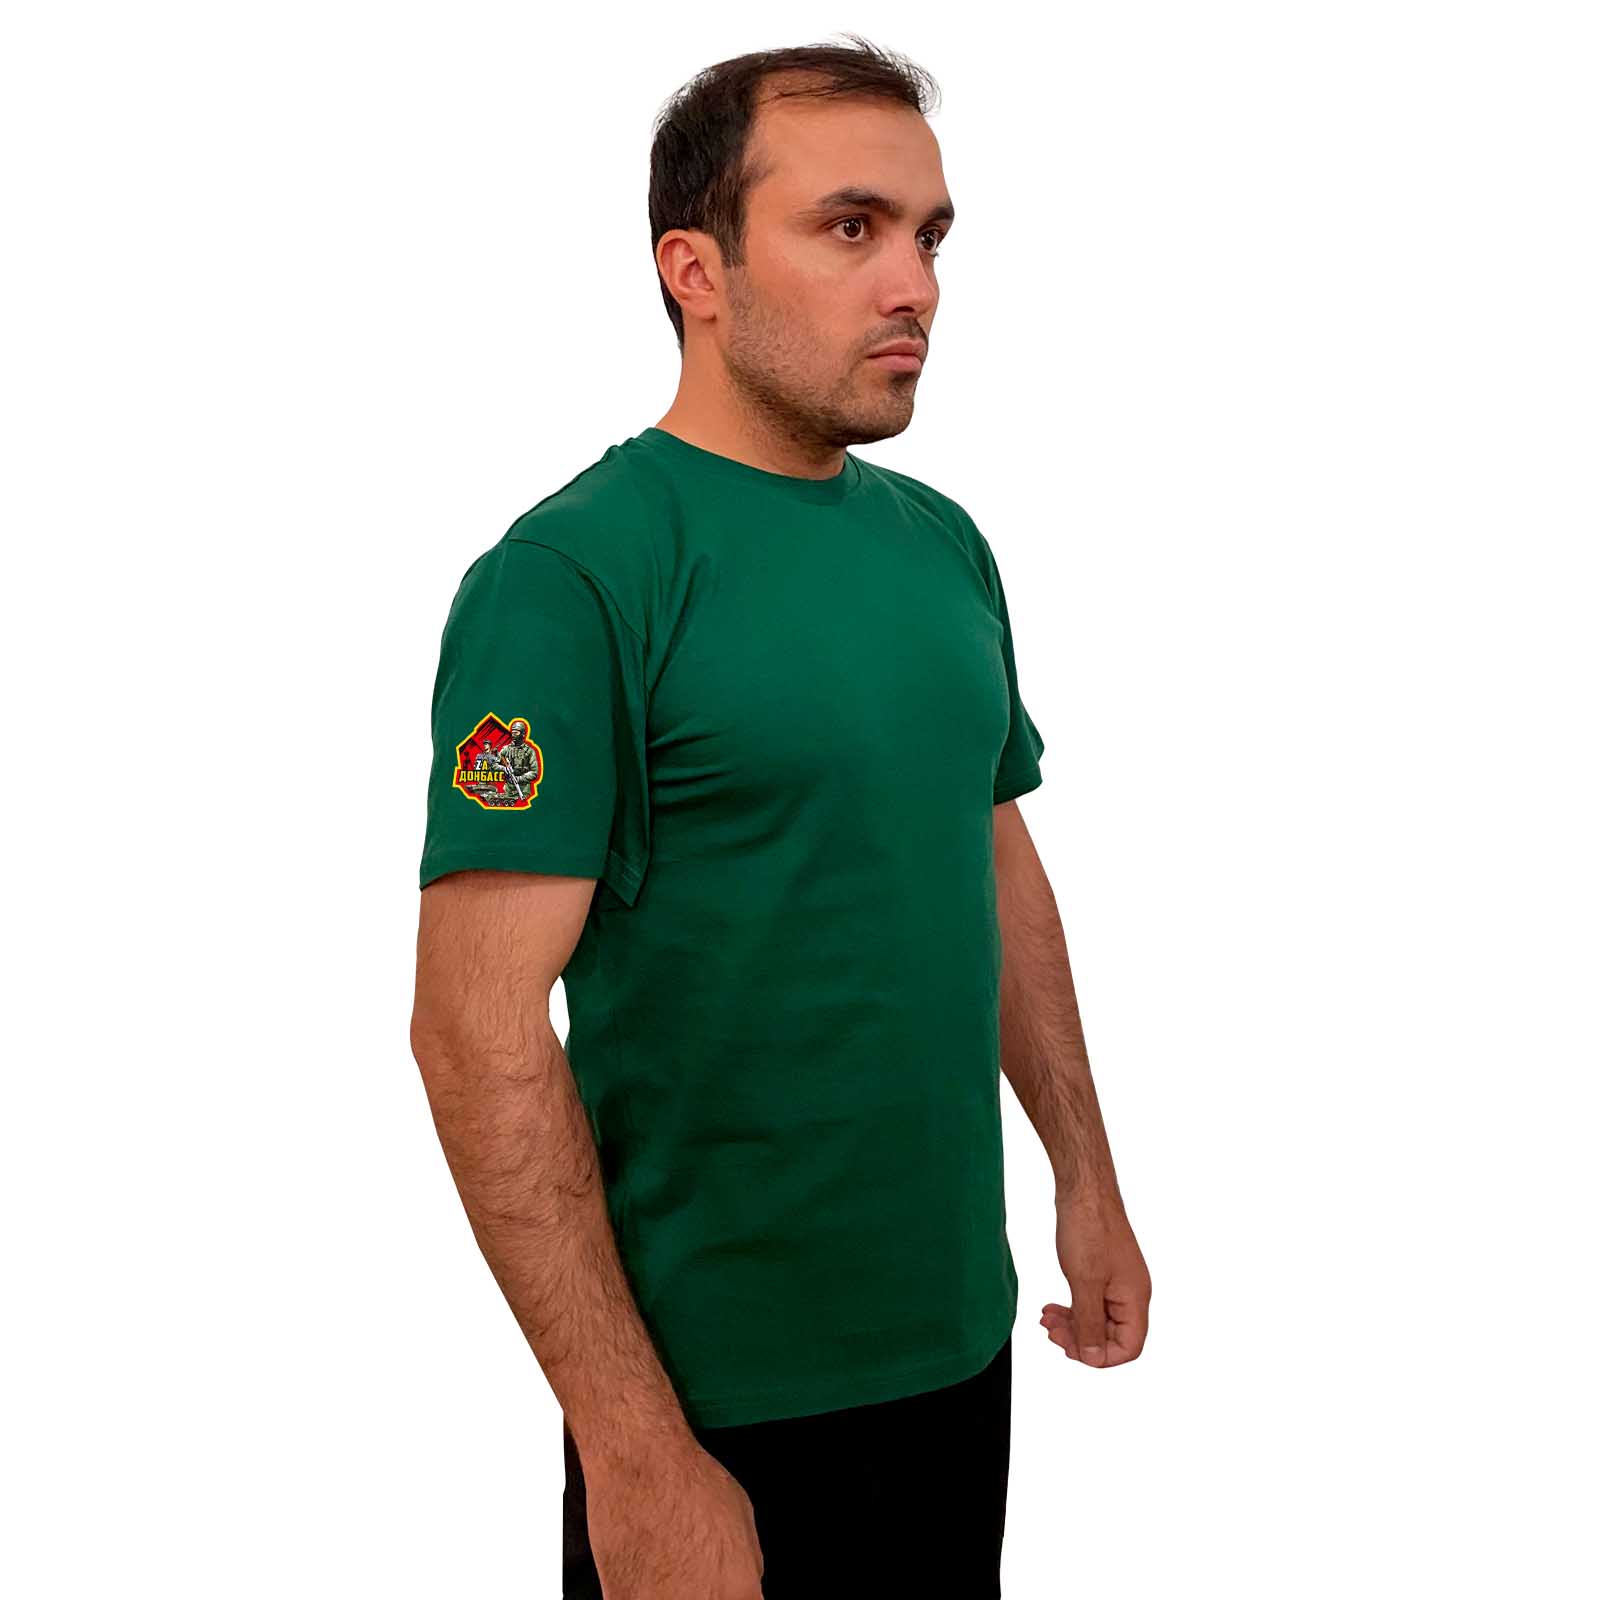 Зелёная футболка с трансфером "Zа Донбасс" на рукаве